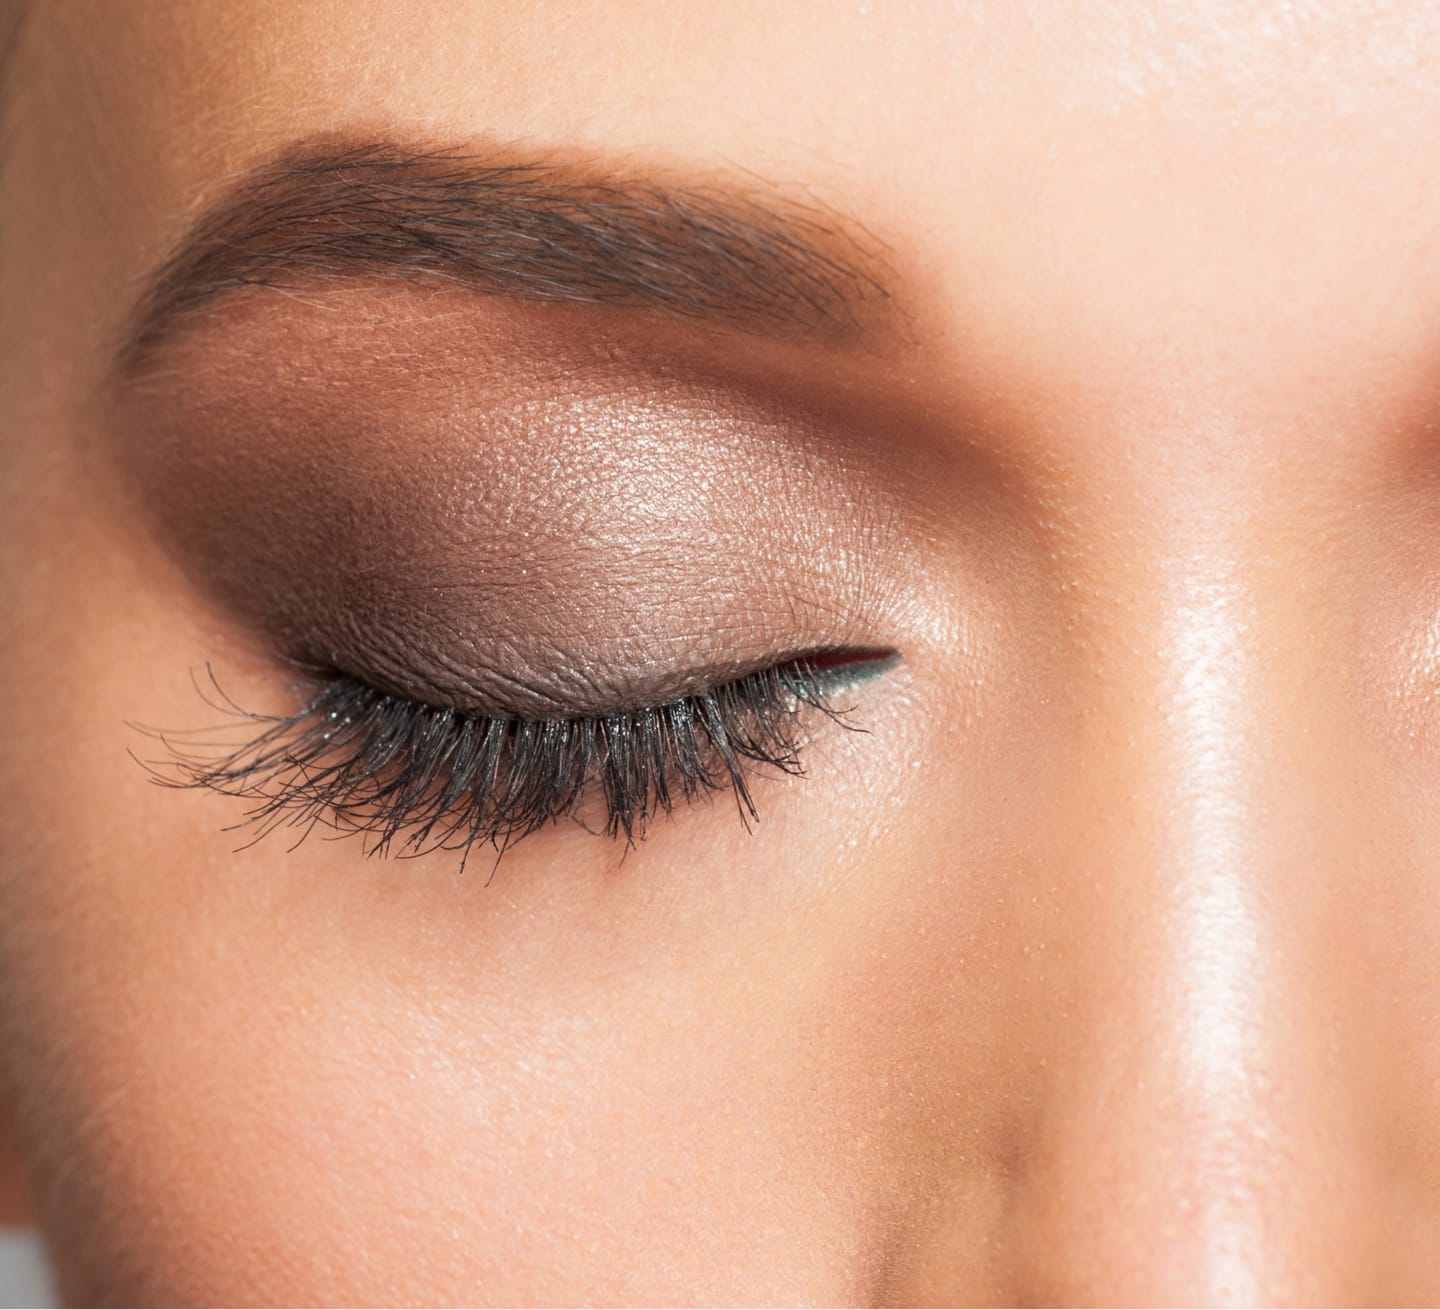 Closeup of a woman's eyelid